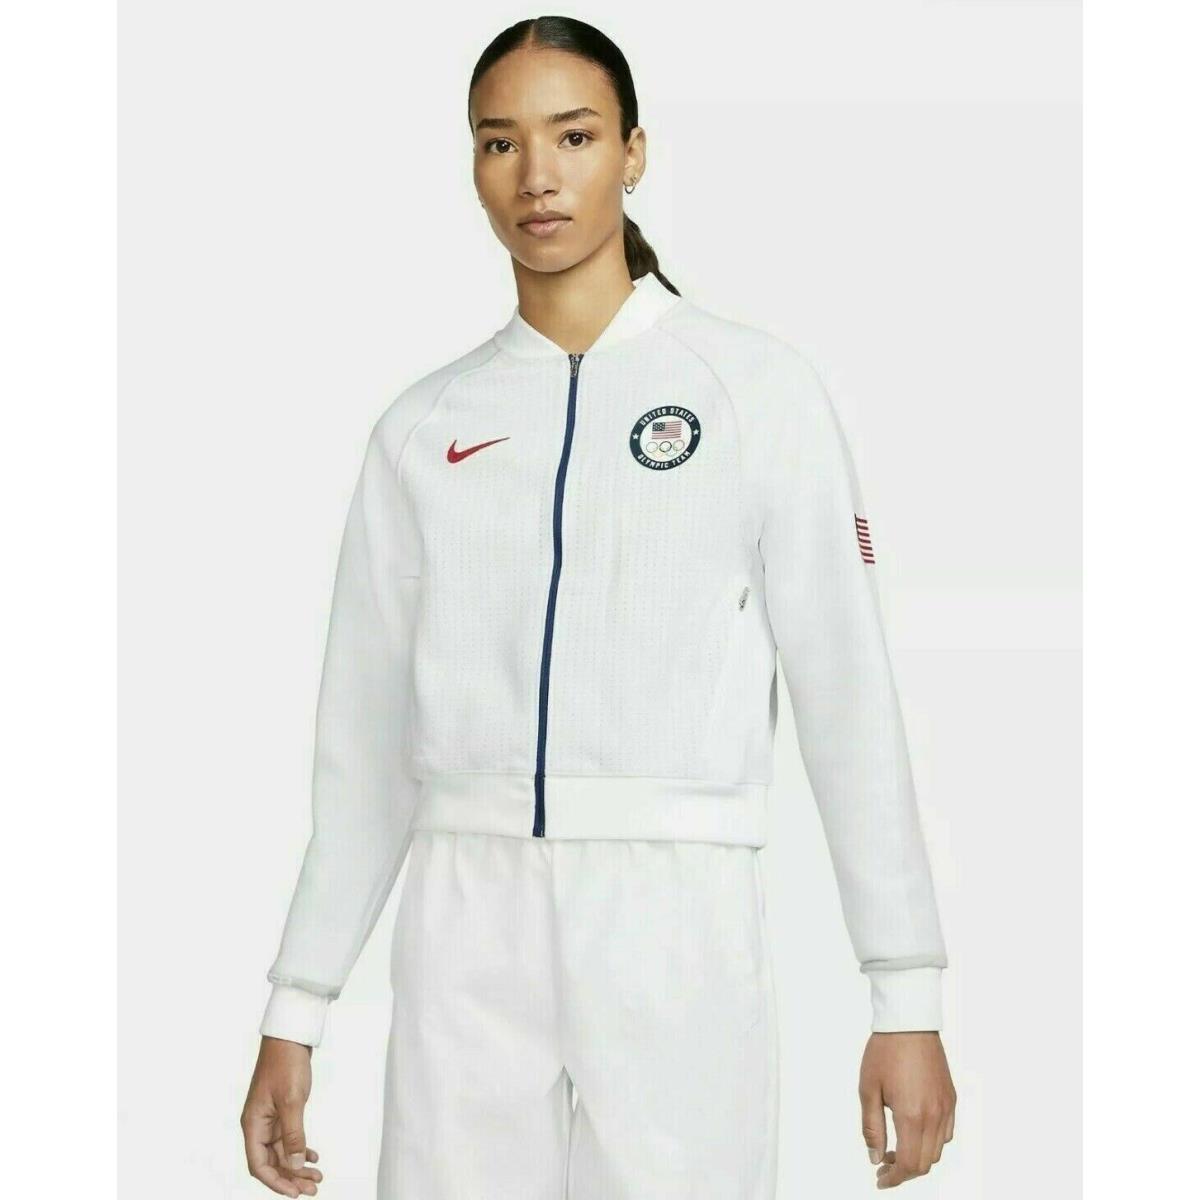 Nike Womens XS Full Zip Team Usa Olympic Jacket 2020 CK4626-100